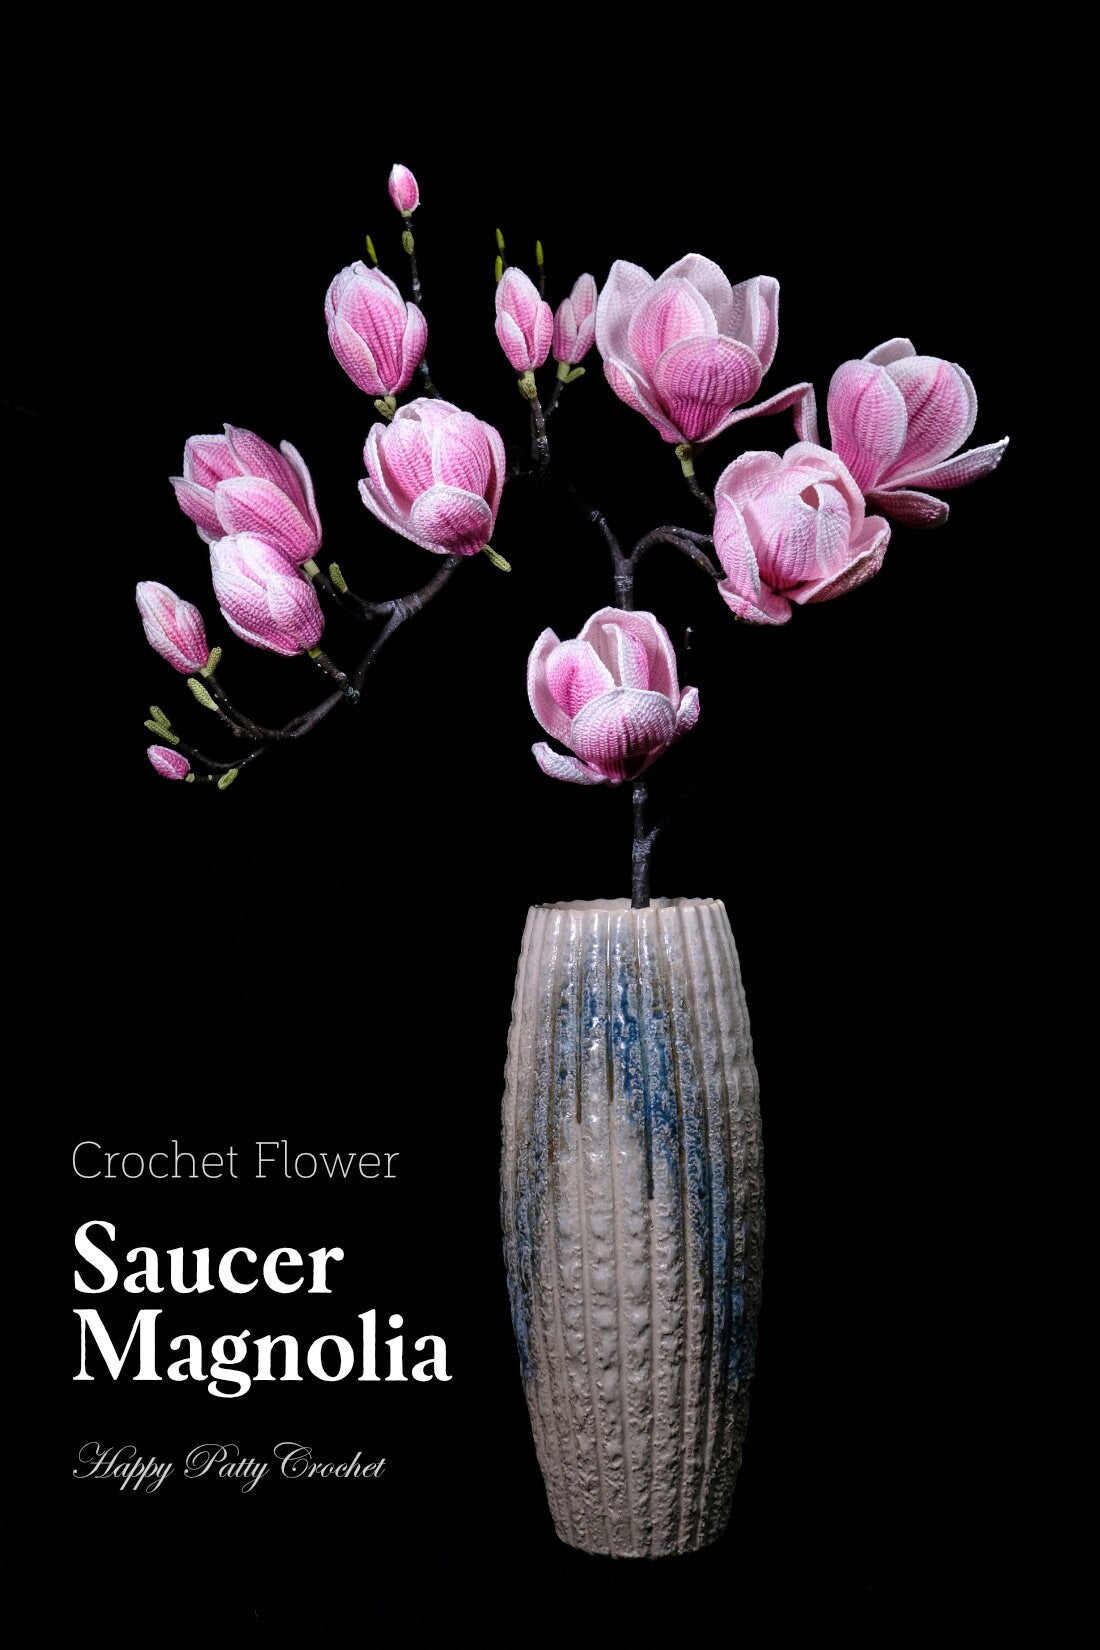 Crochet Pattern for a Saucer Magnolia Flower - Crochet Flower Pattern for a Magnolia Flower